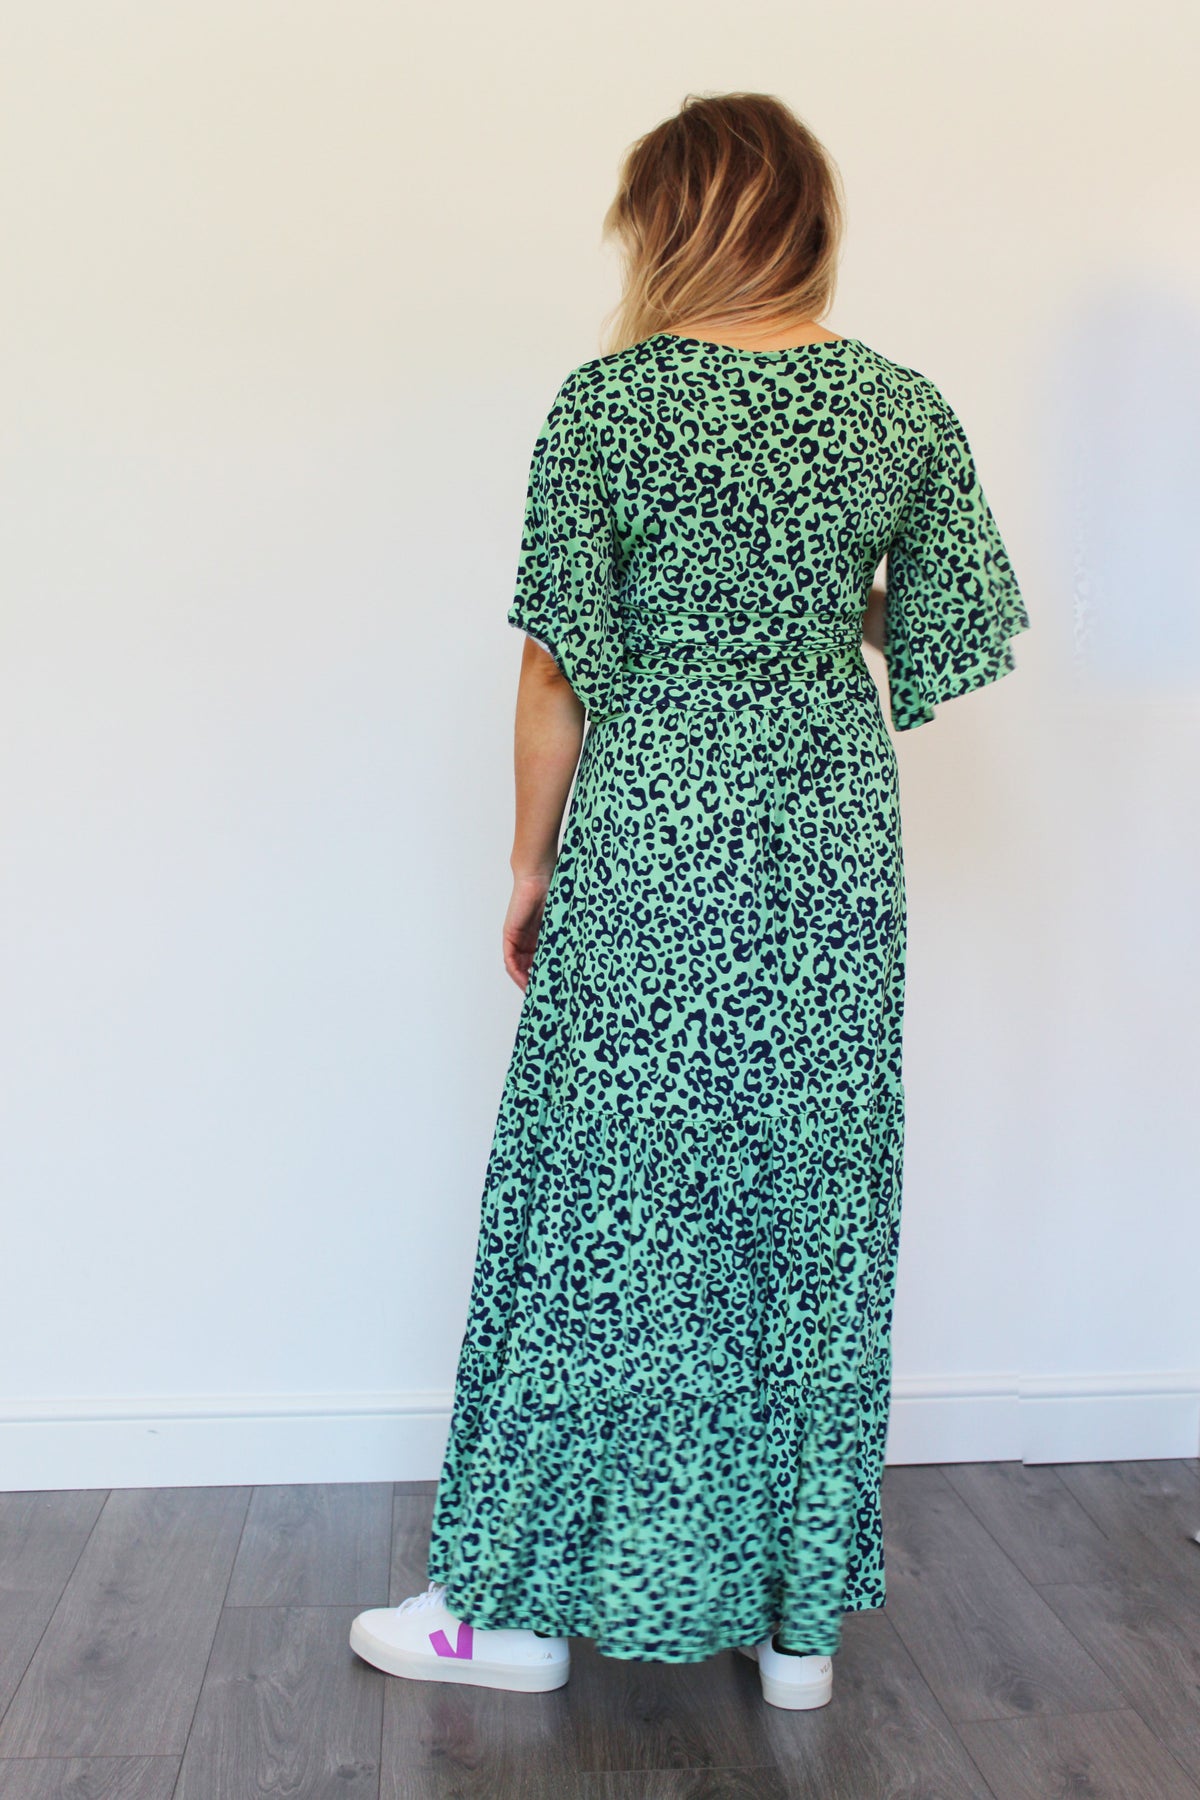 ONJENU Tilly Maxi Dress in Green Cheetah